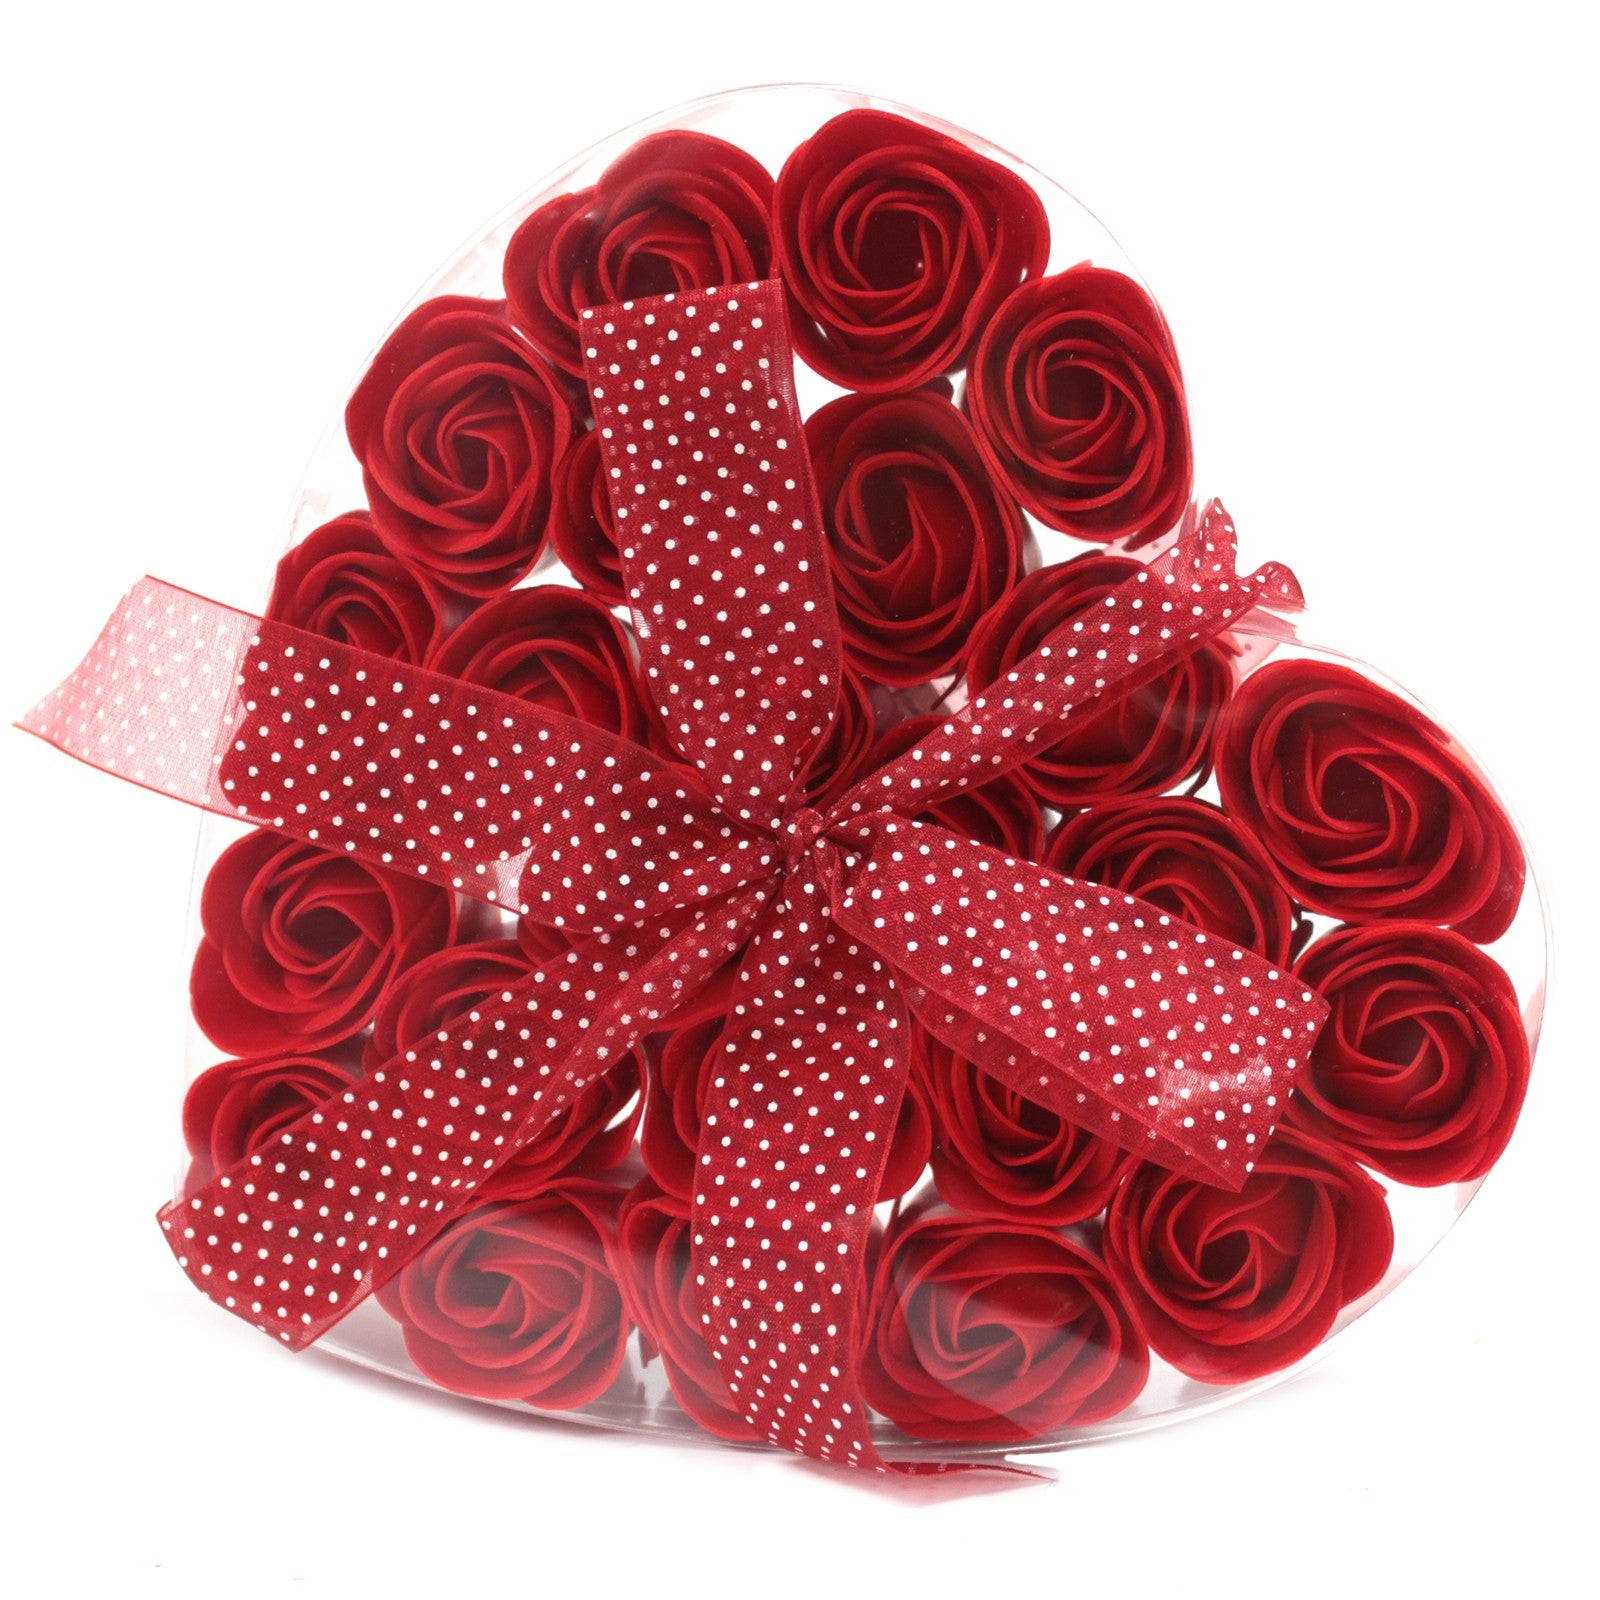 Soap Flower Heart Box - 24 Red Roses - Ultrabee